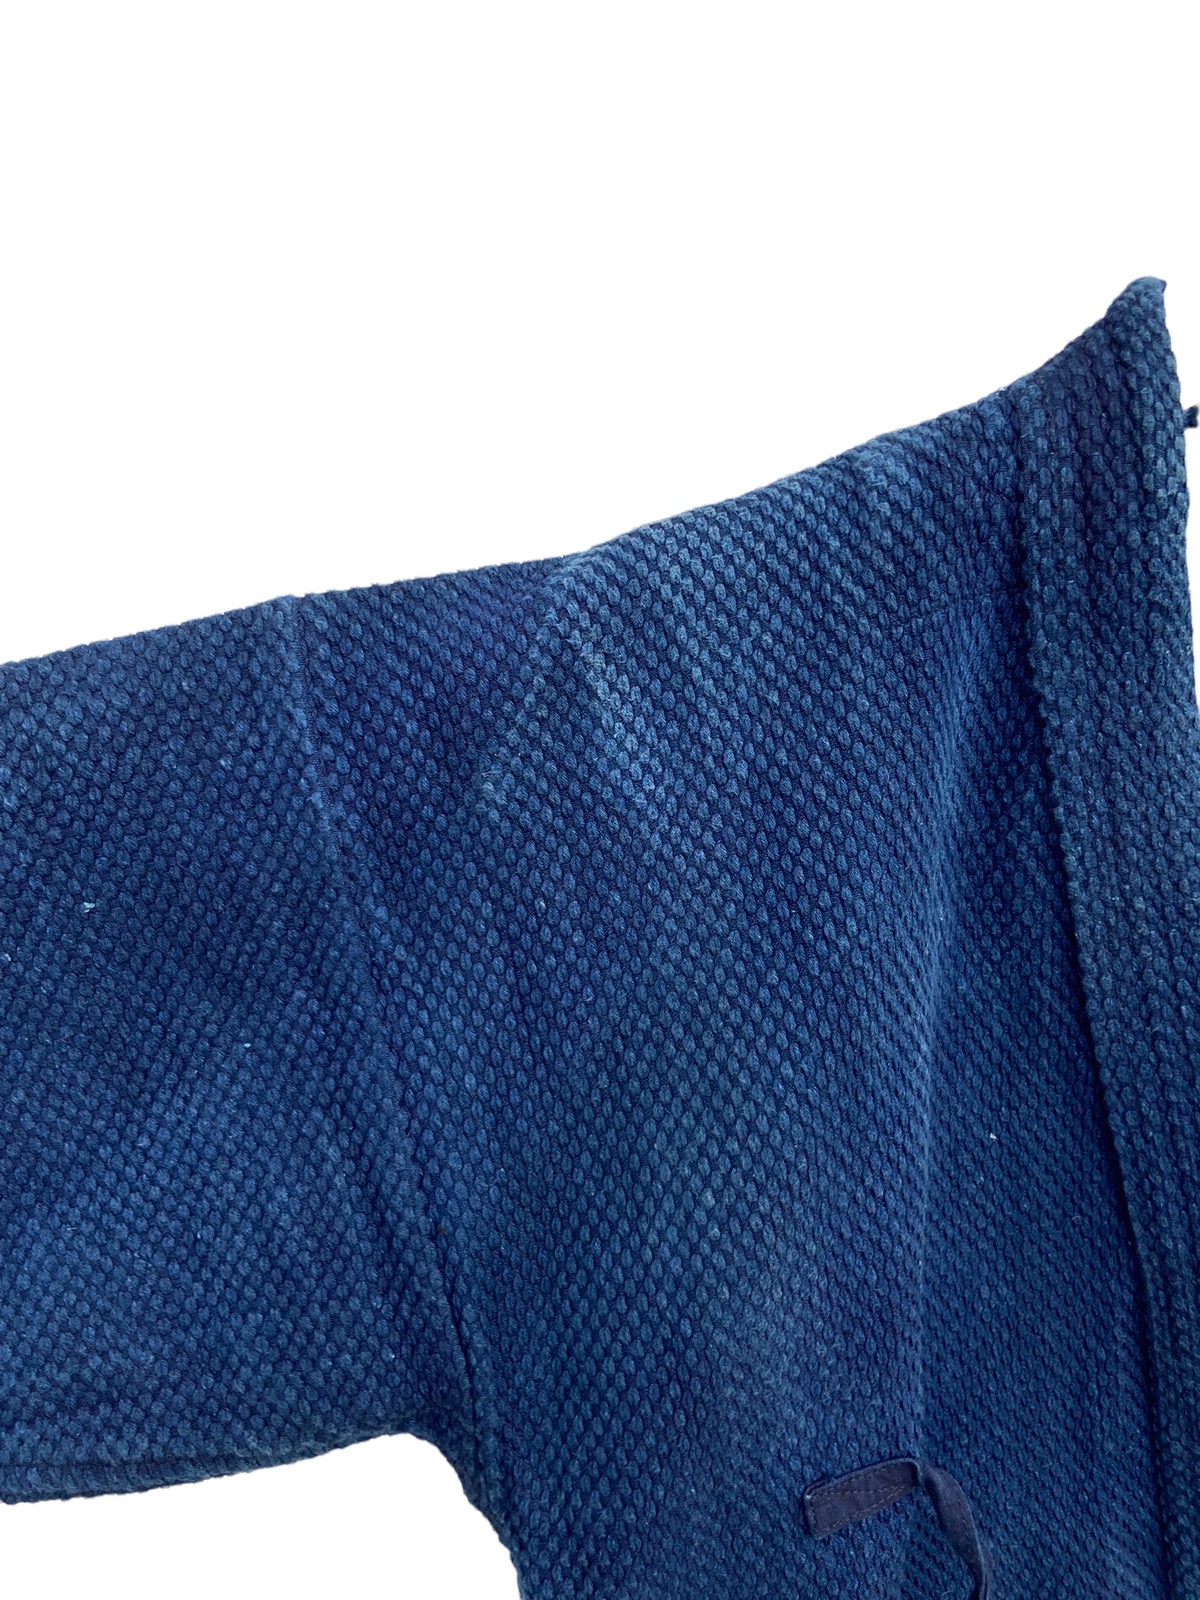 Vintage - Japanese Brand Indigo Blue Sanjuro Jacket - 5